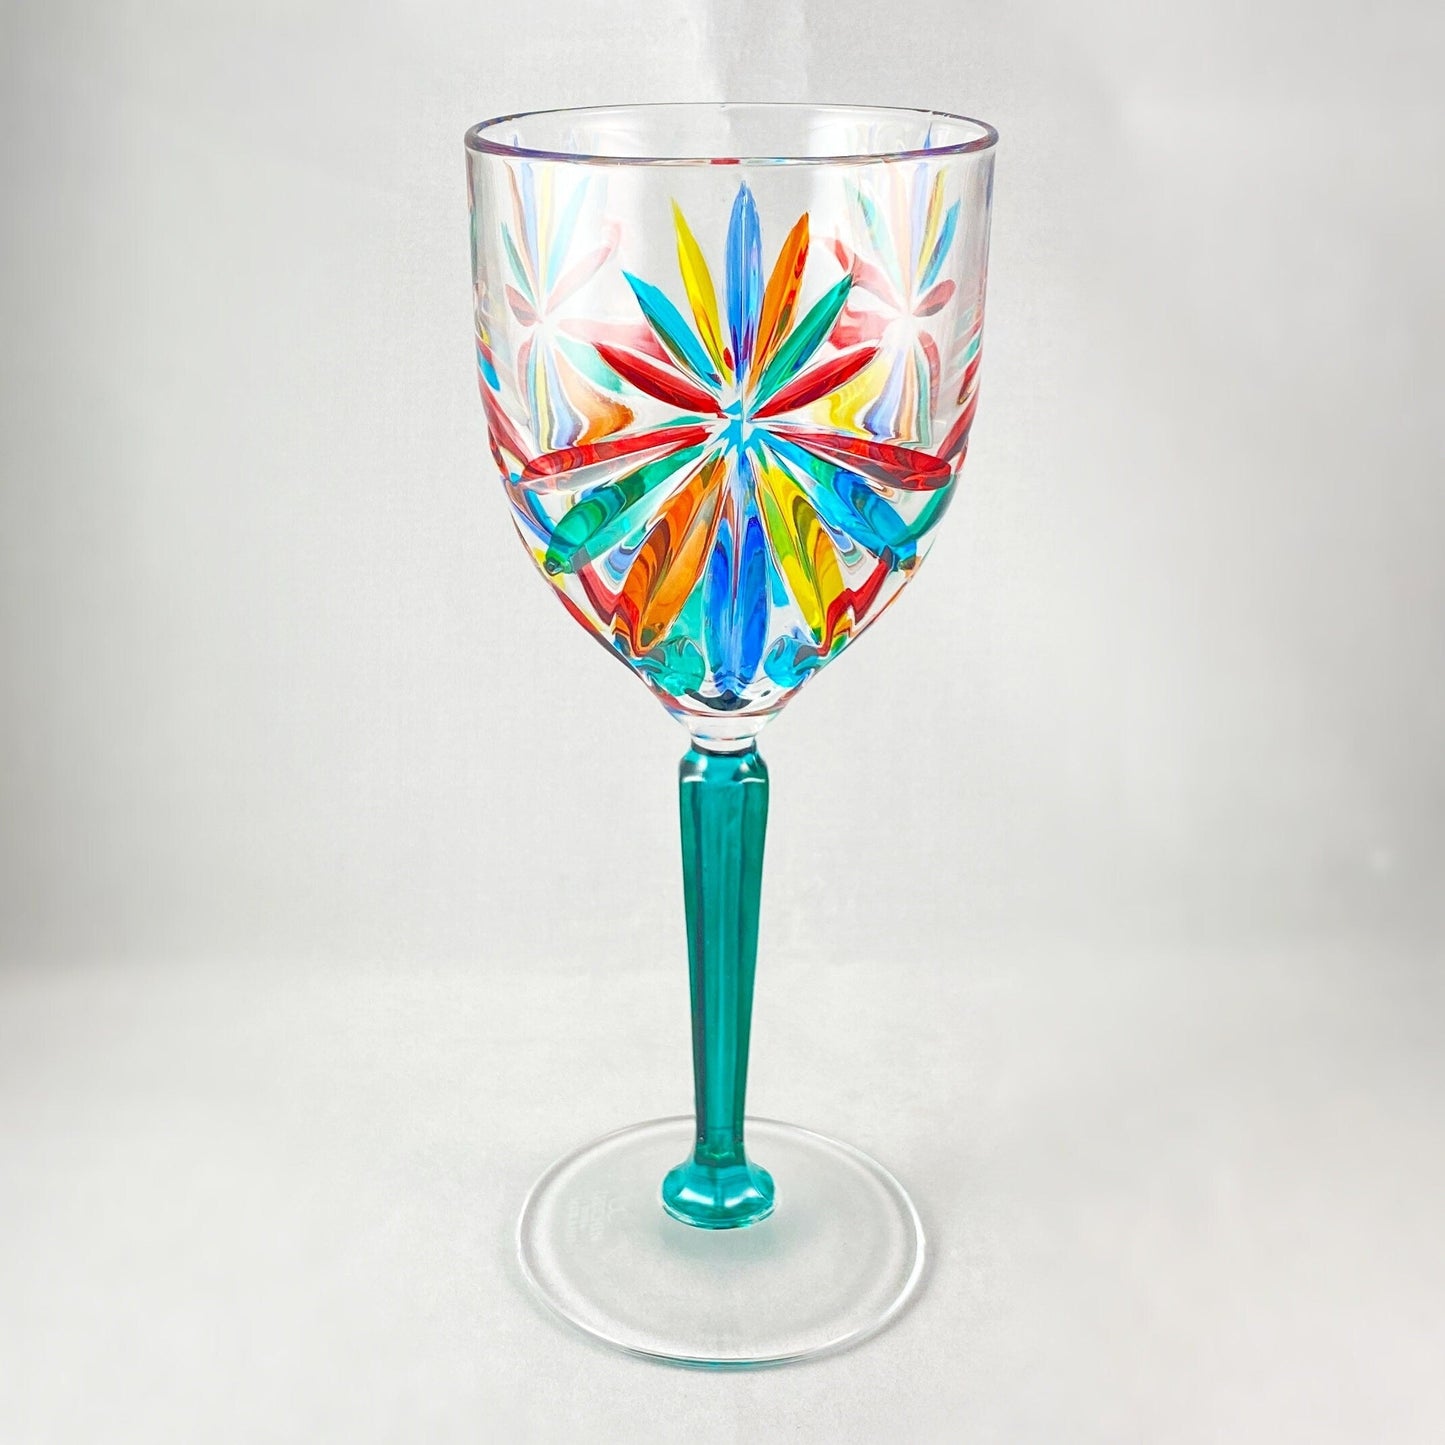 Green Stem Venetian Glass Oasis Wine Glass - Handmade in Italy, Colorful Murano Glass